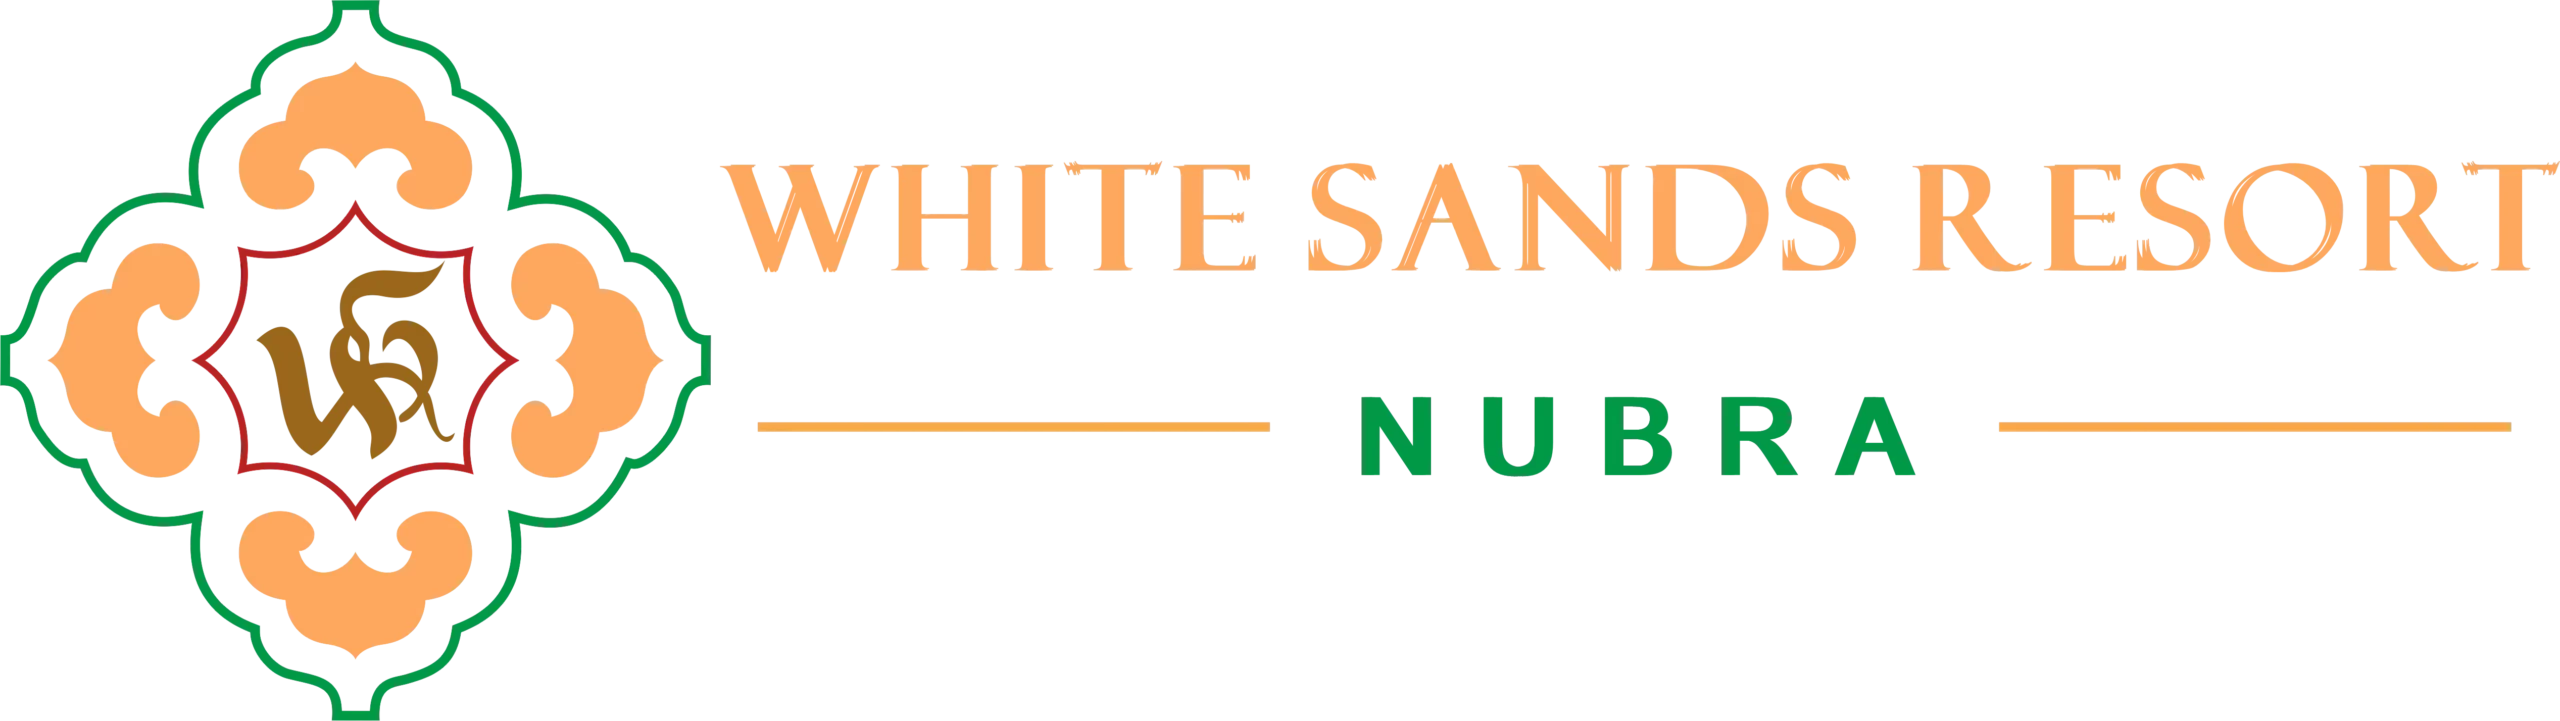 WHITE SANDS NUBRA RESORT LOGO